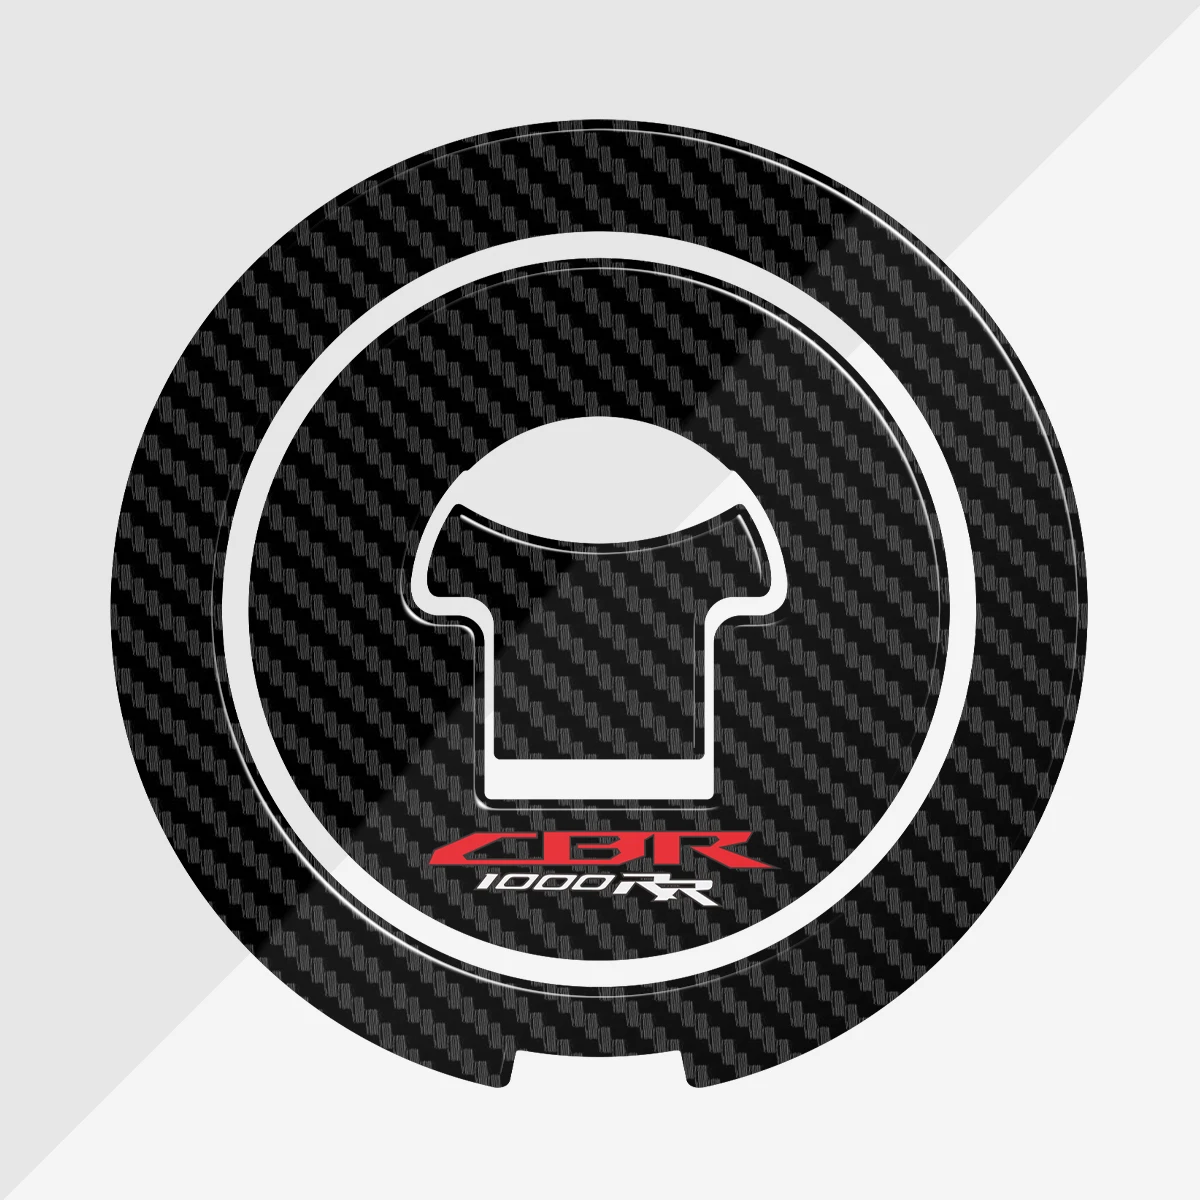 3D Carbon Fiber Tank Pad Gas Cap Decal Protector Cover For Honda CBR1000RR CBR 1000RR 2004-2013 2012 2011 2010 2009 2008 2007 soft leather door panels armrest cover for honda crv 2012 2013 2014 2015 2016 2017 car door armrest cover sticker trim